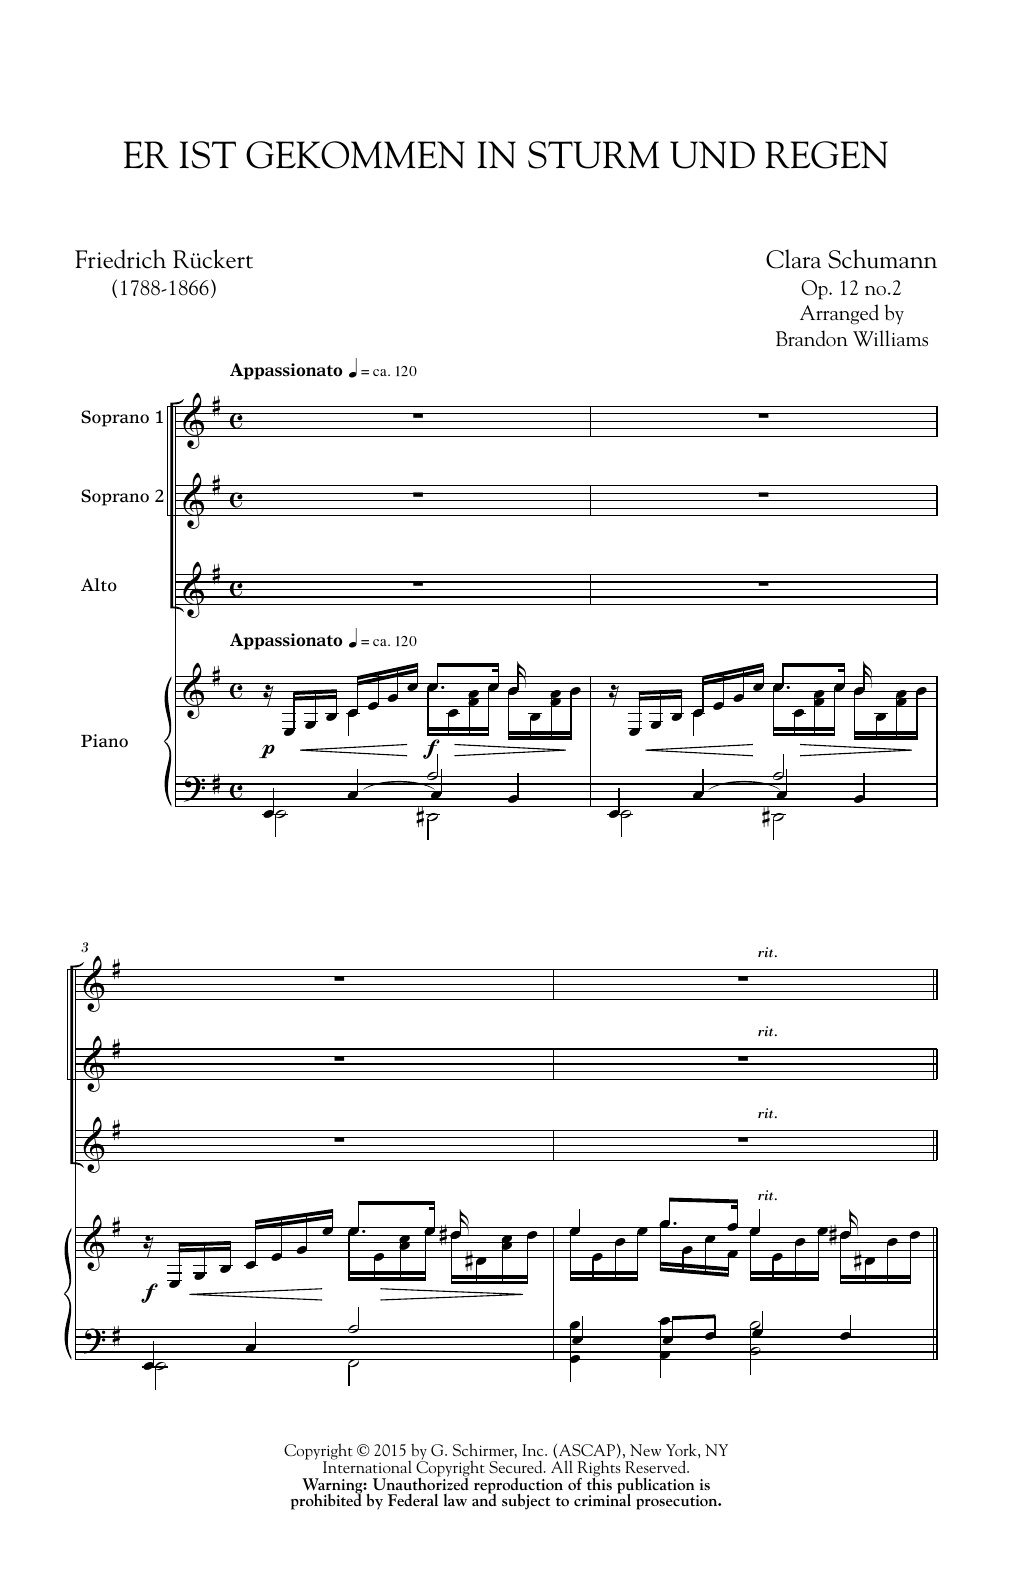 Download Brandon Williams Er Ist Gekommen In Sturm Und Regen Sheet Music and learn how to play SSA PDF digital score in minutes